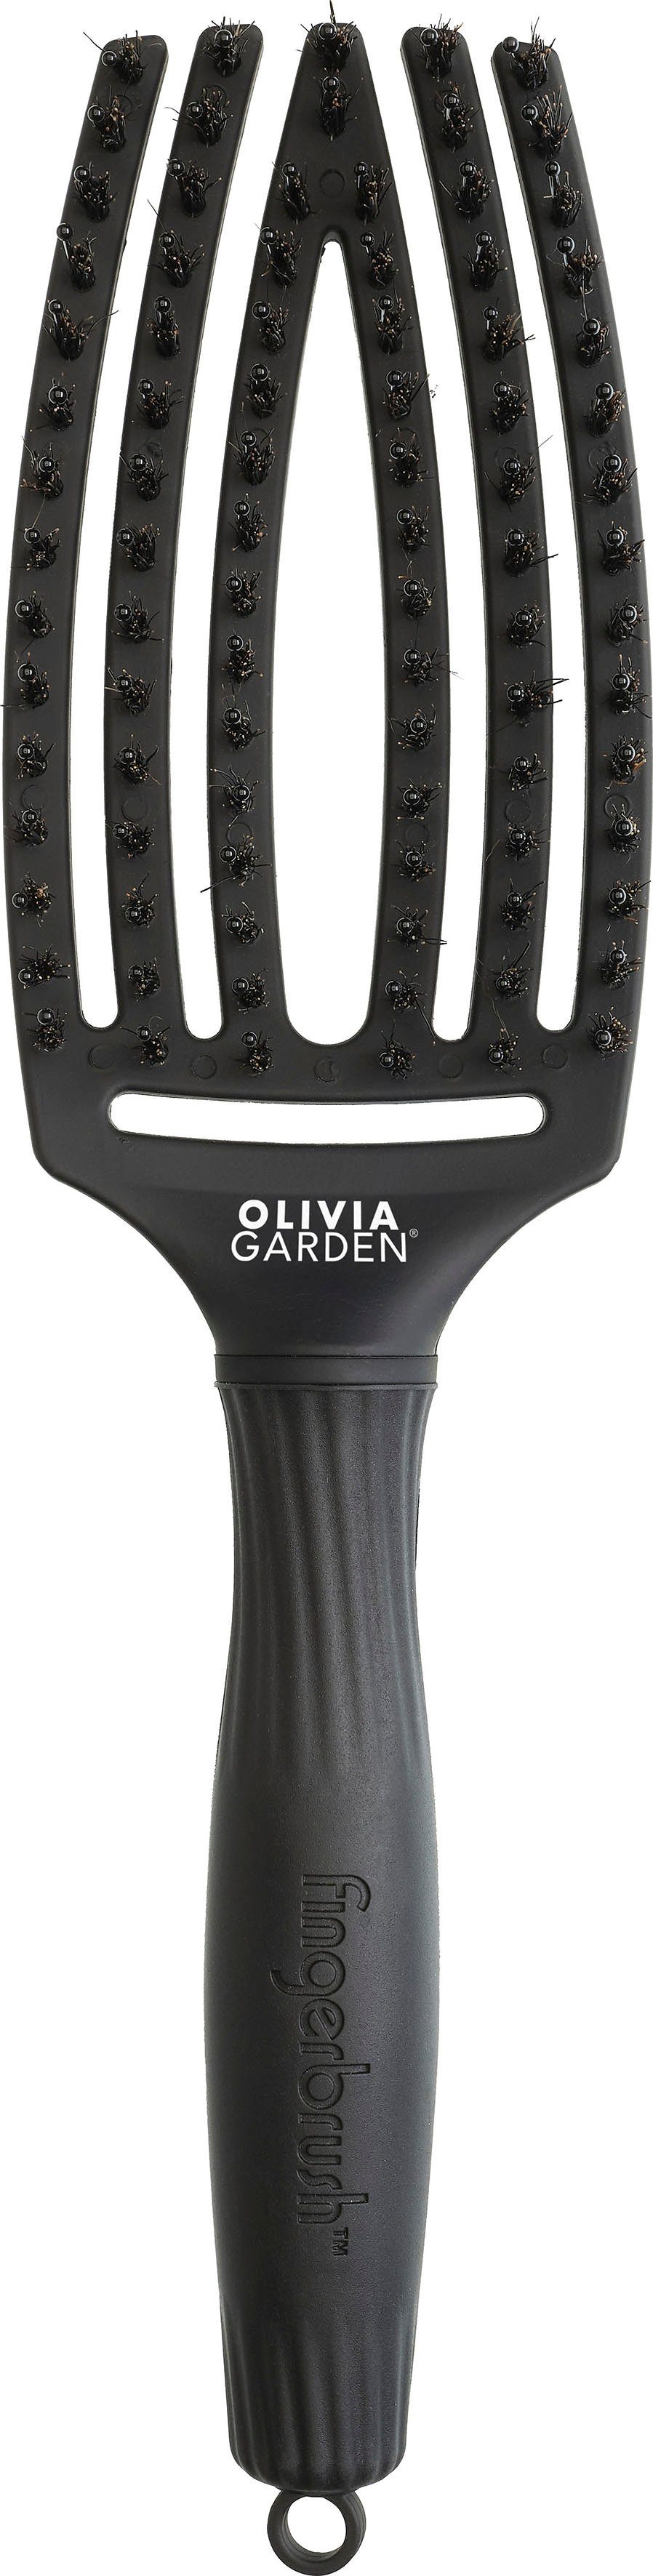 Fingerbrush OLIVIA GARDEN Combo Medium Haarbürste